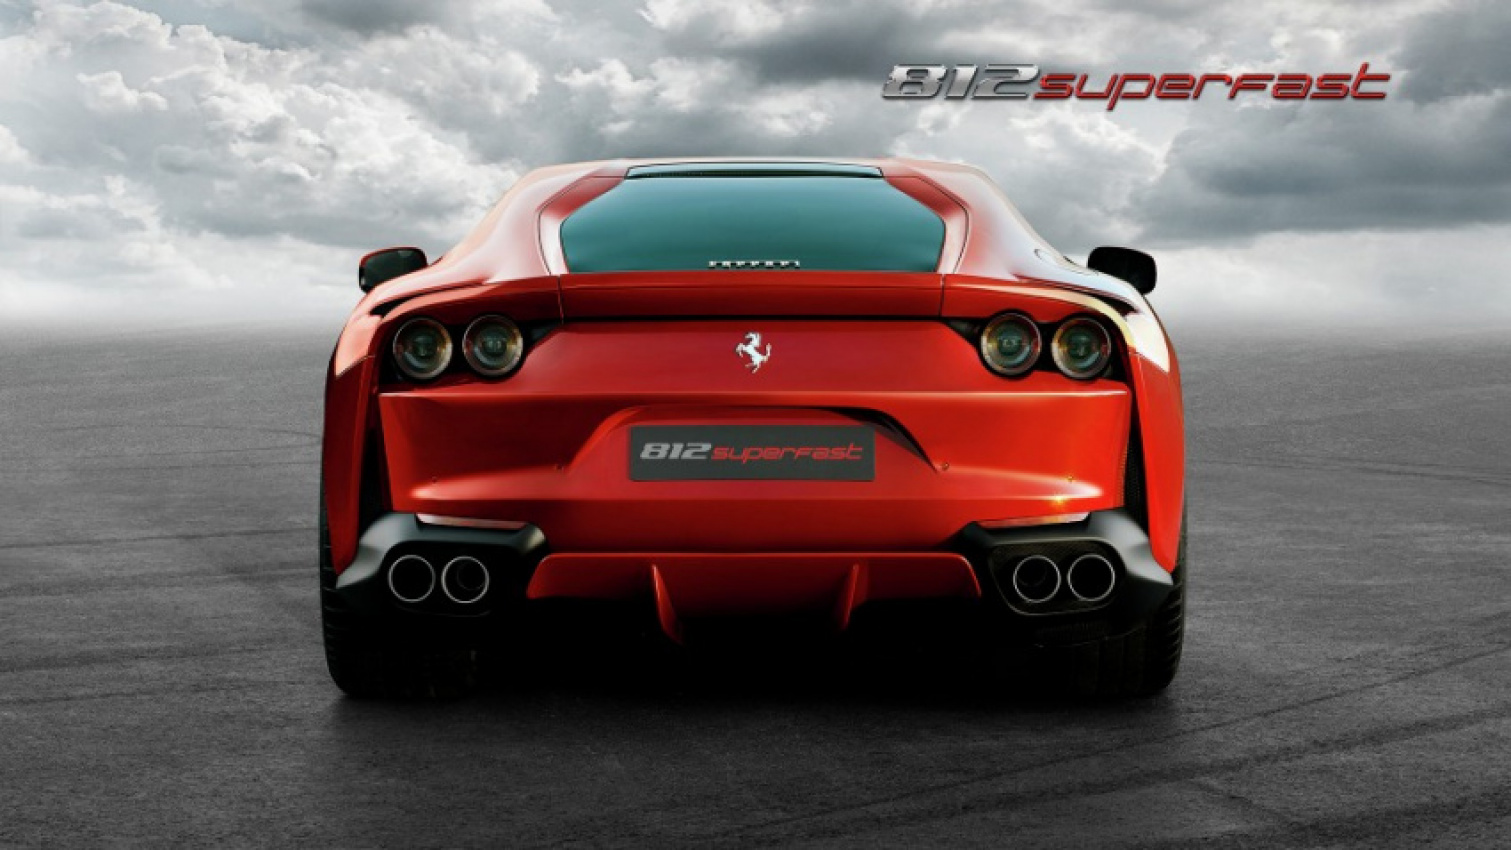 autos, cars, ferrari, autos ferrari 812 superfast, meet the 812 superfast - the fastest production ferrari in history